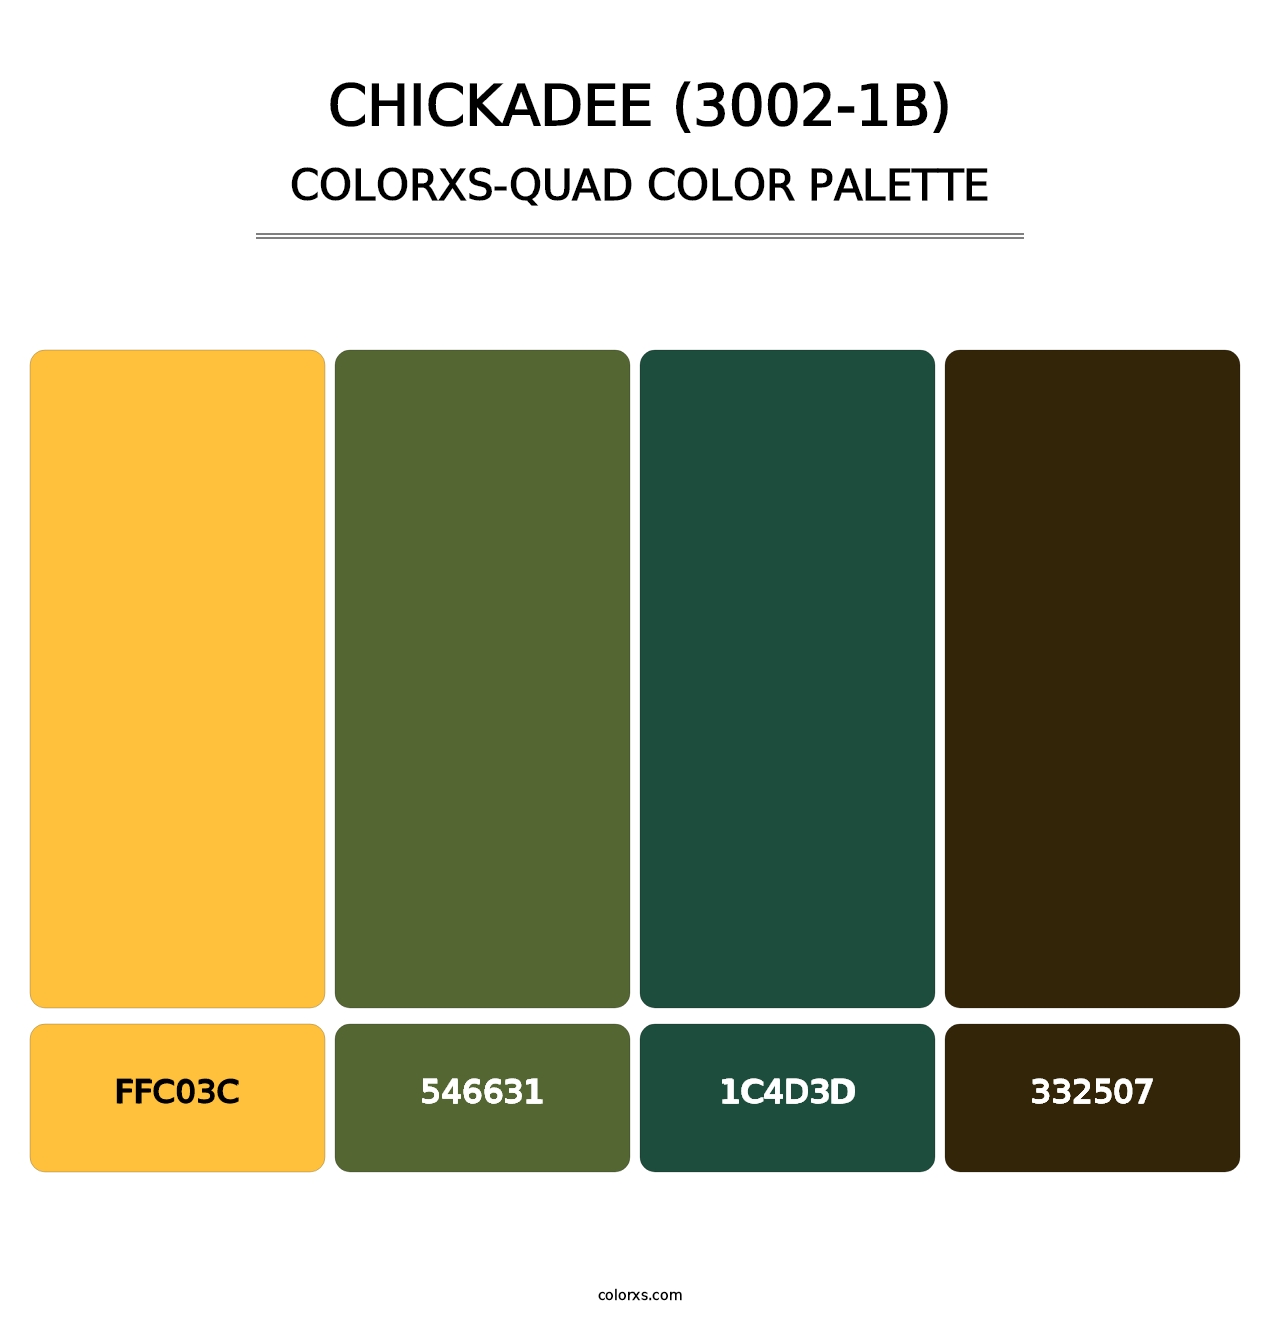 Chickadee (3002-1B) - Colorxs Quad Palette